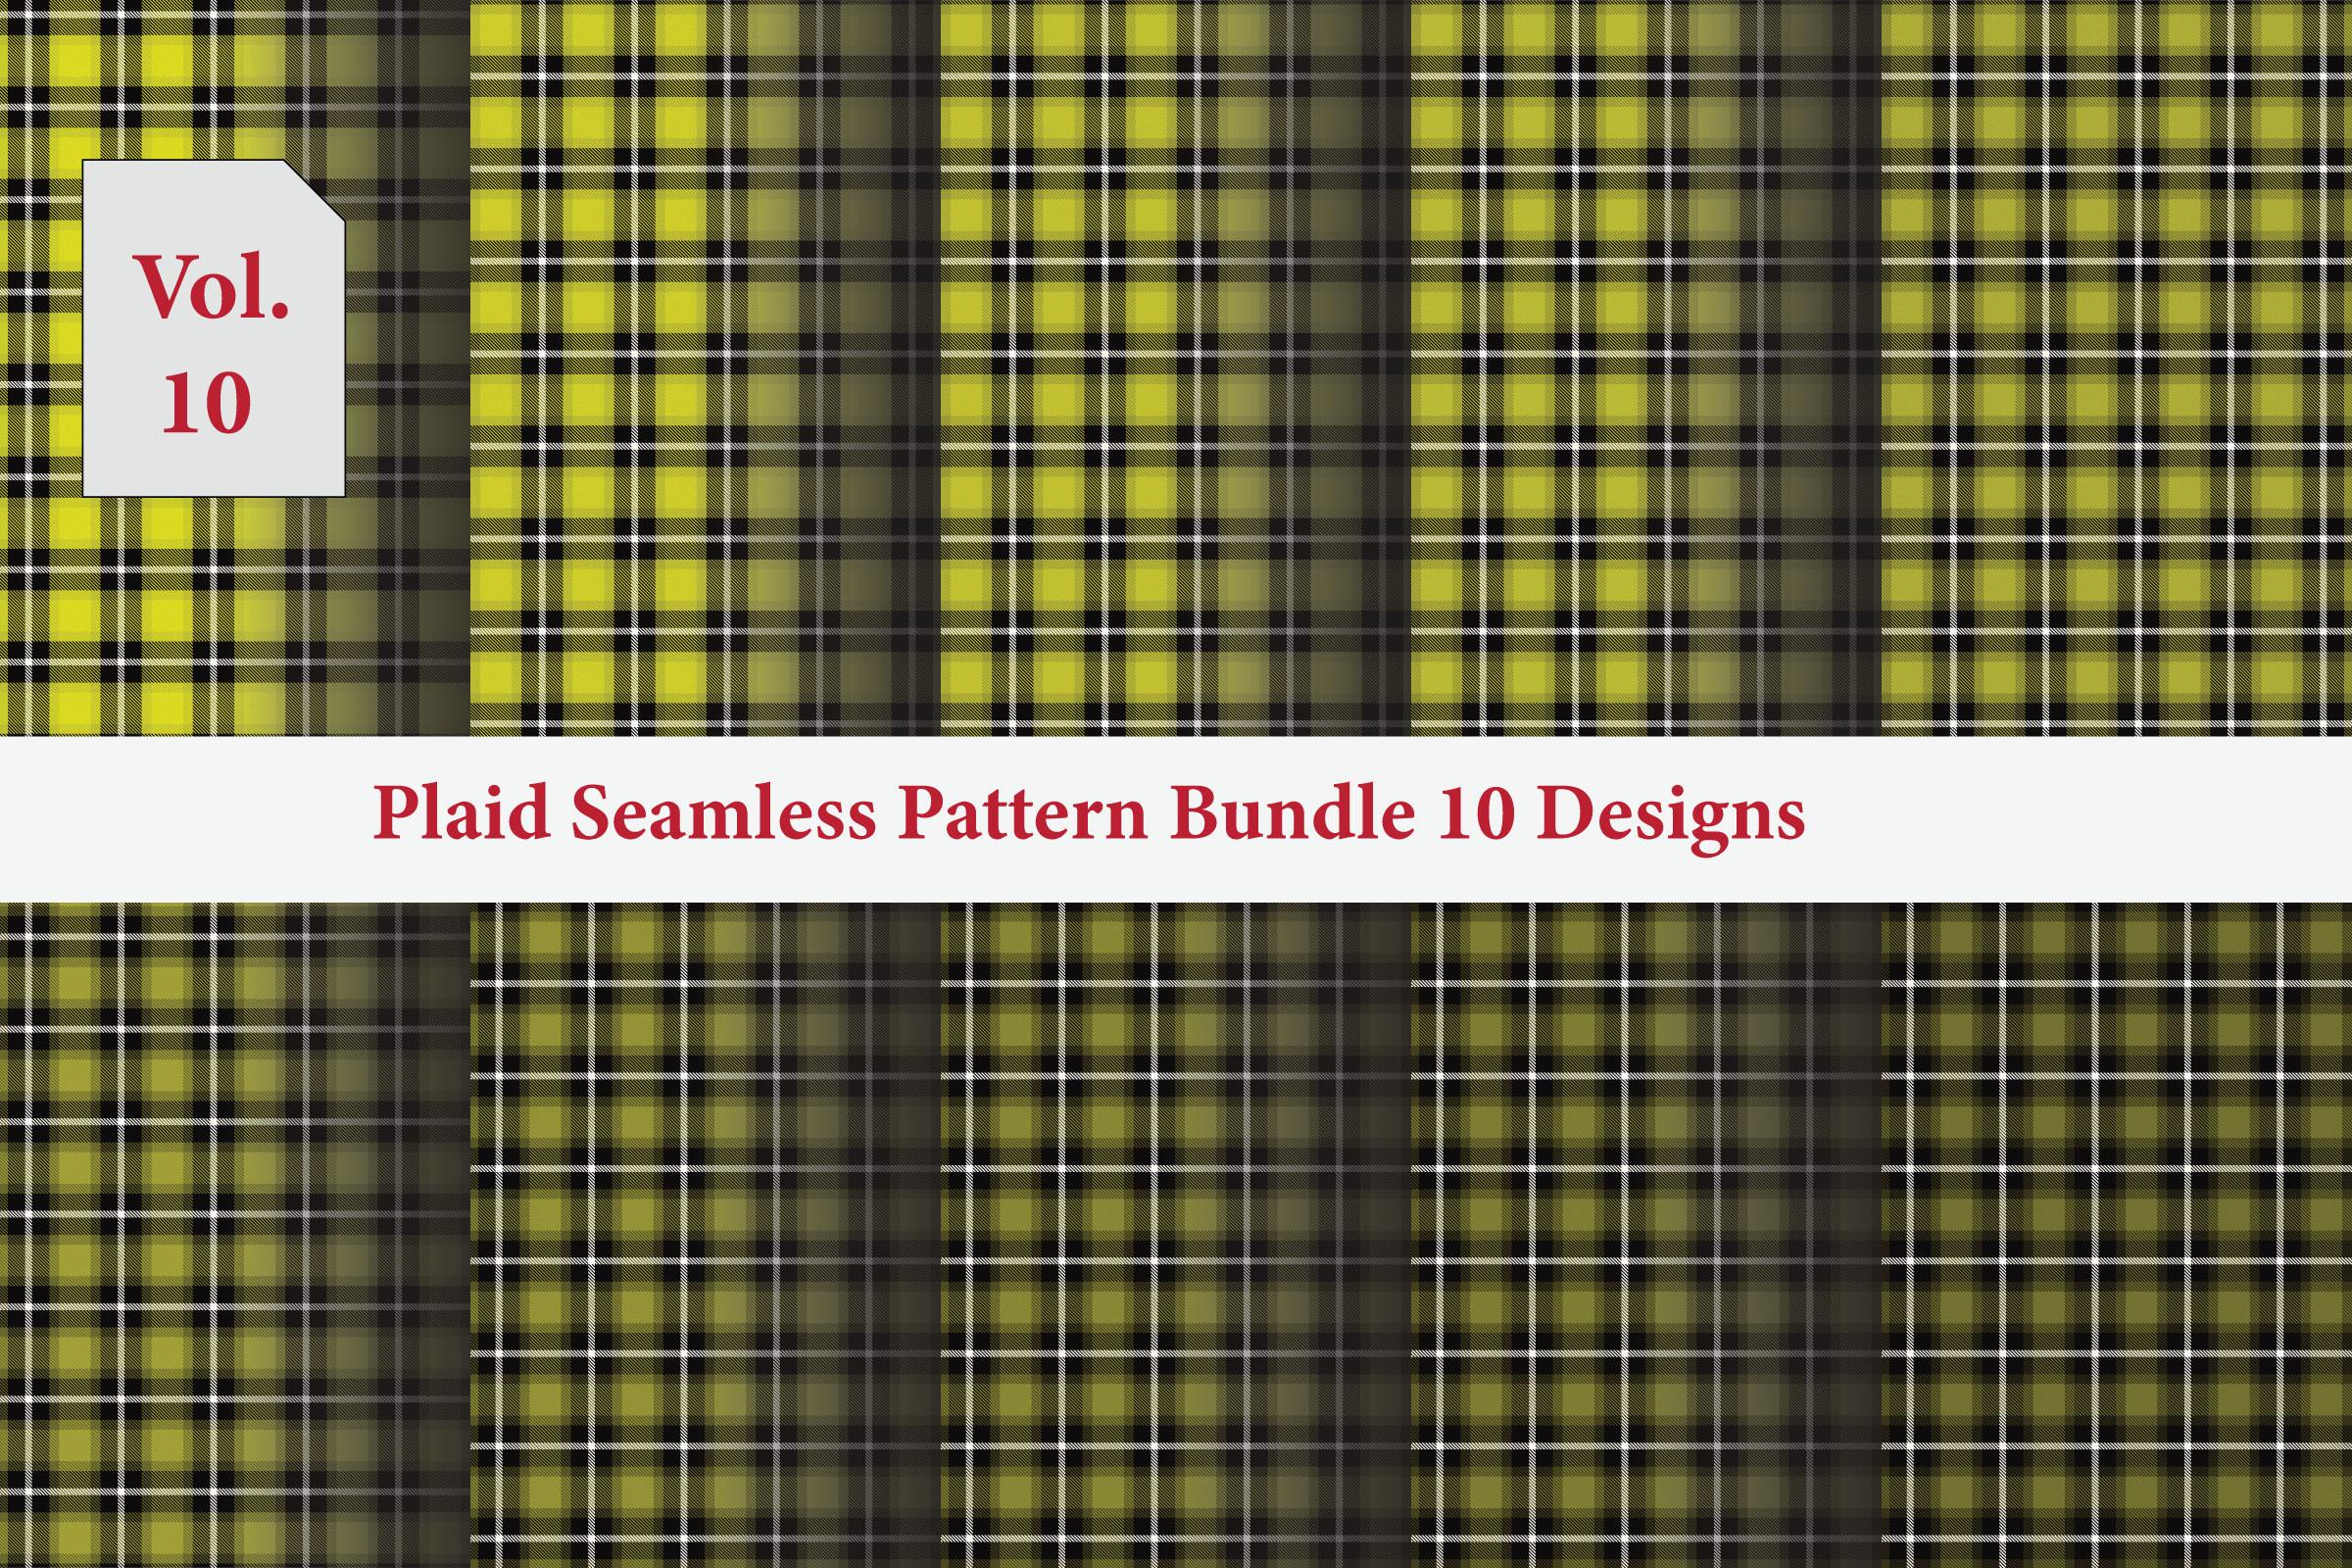 Plaid Pattern Bundle 10 Designs Vol.10